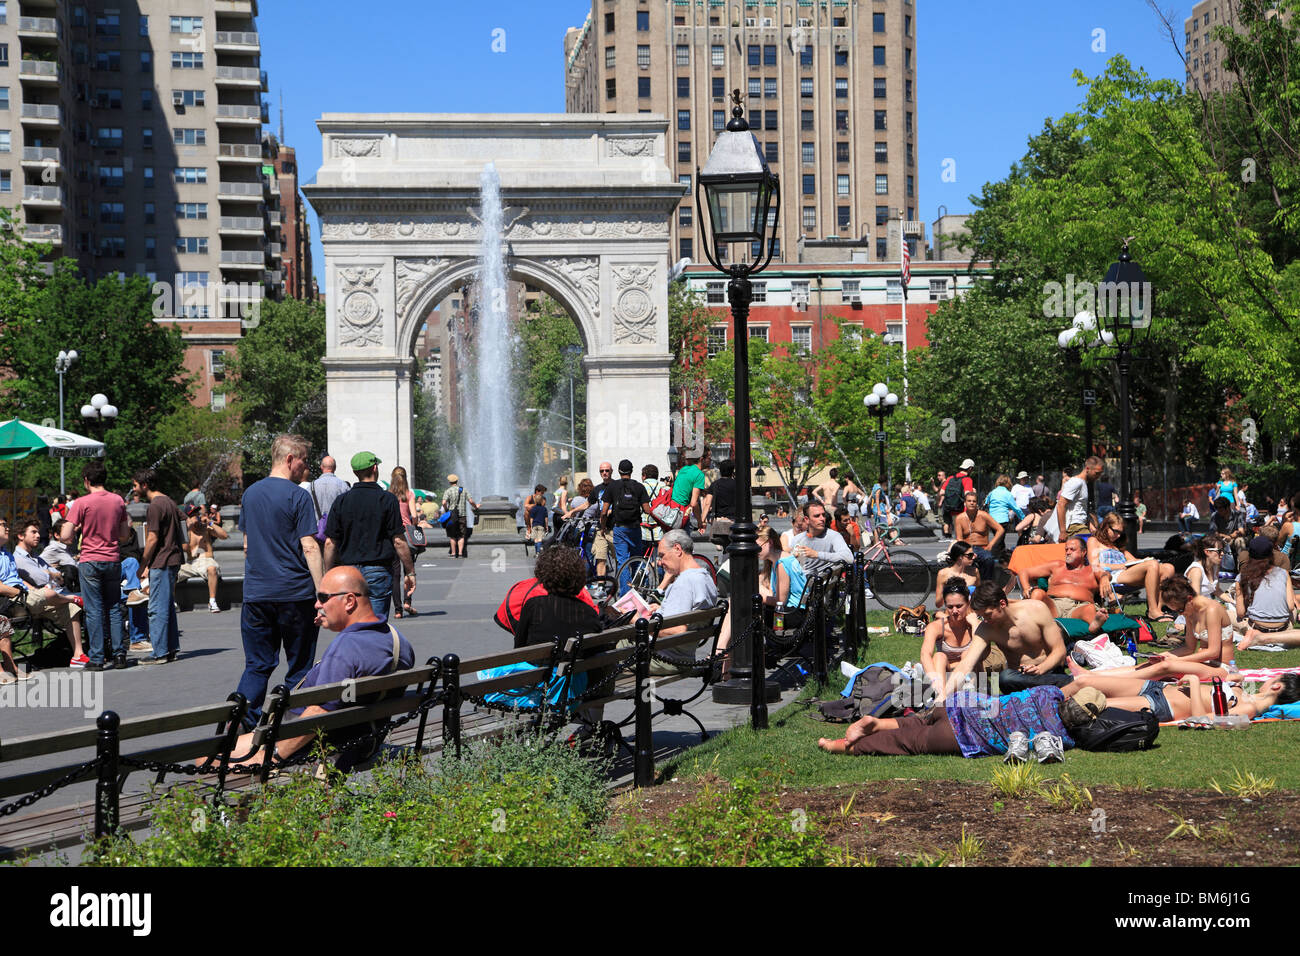 Washington Square Park, Washington Square Arch, Greenwich Village, West Village, Manhattan, New York City, USA Stock Photo